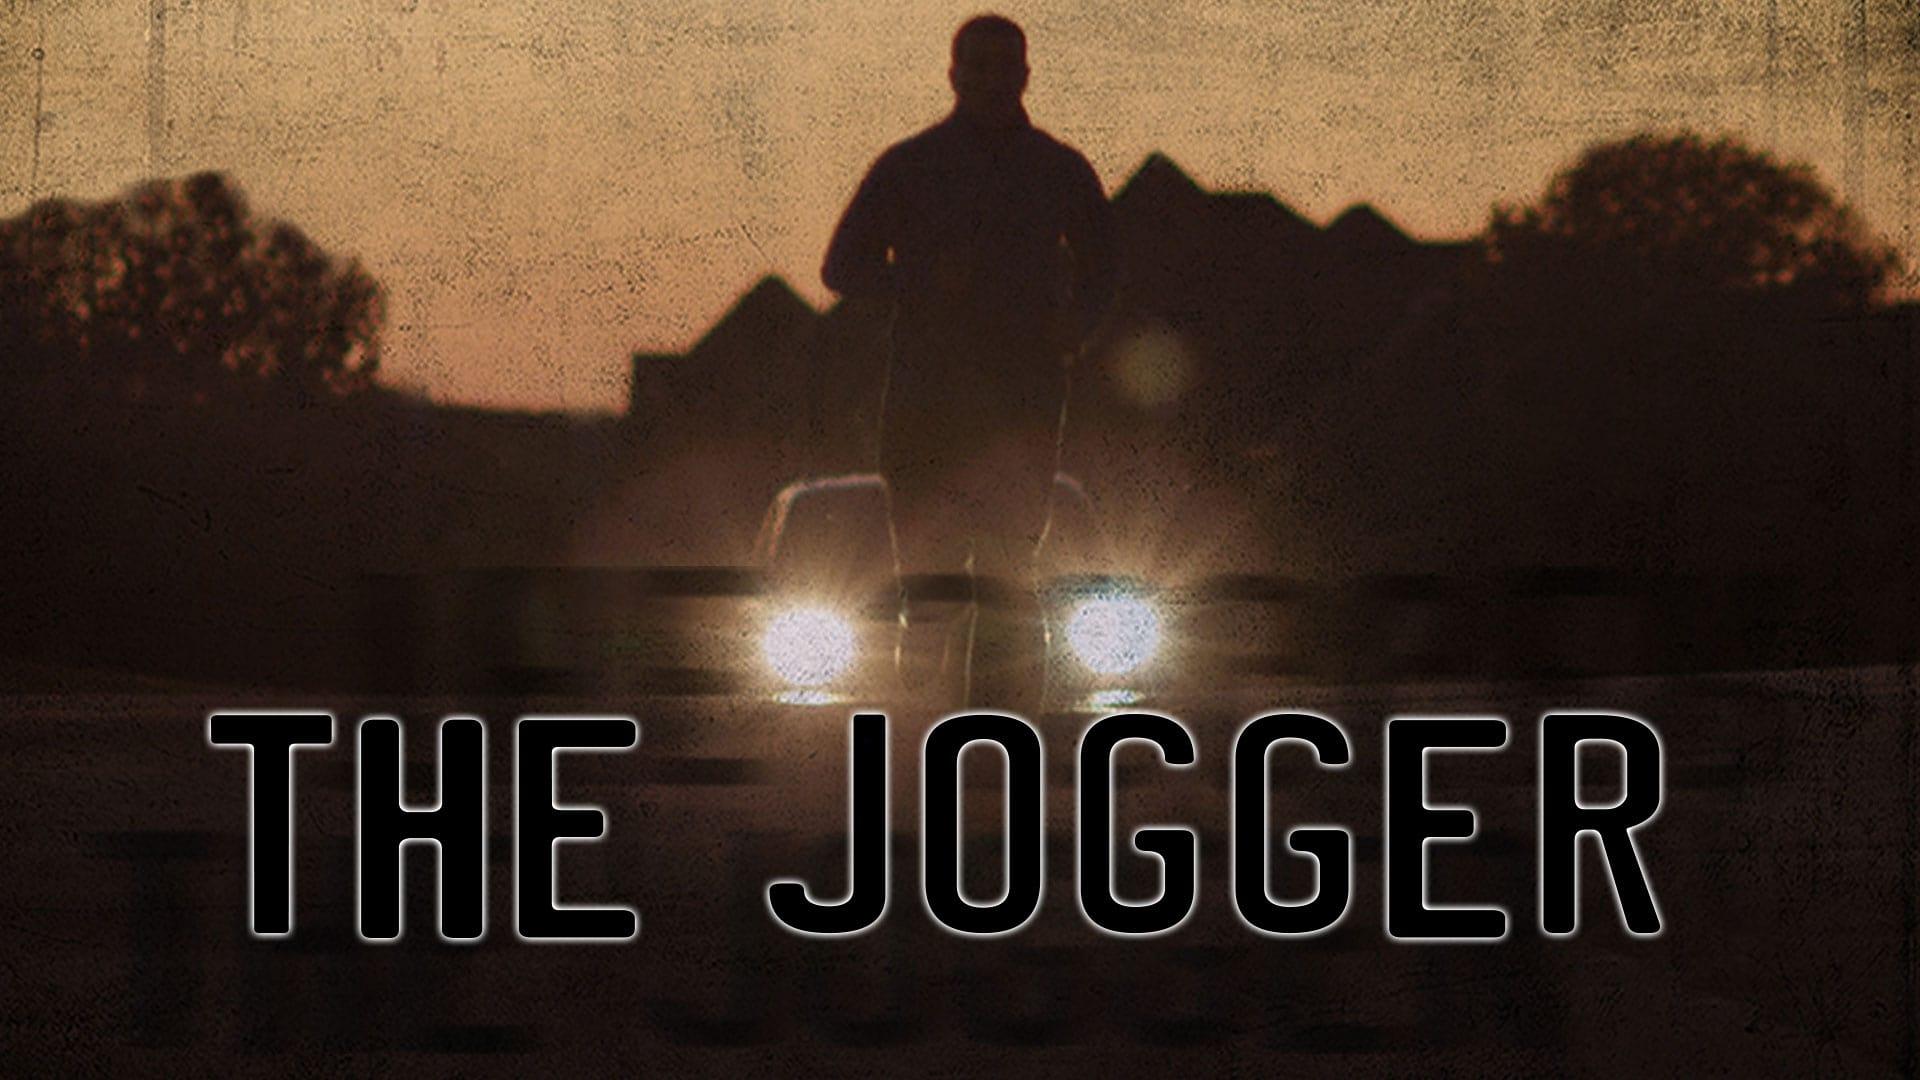 The Jogger backdrop